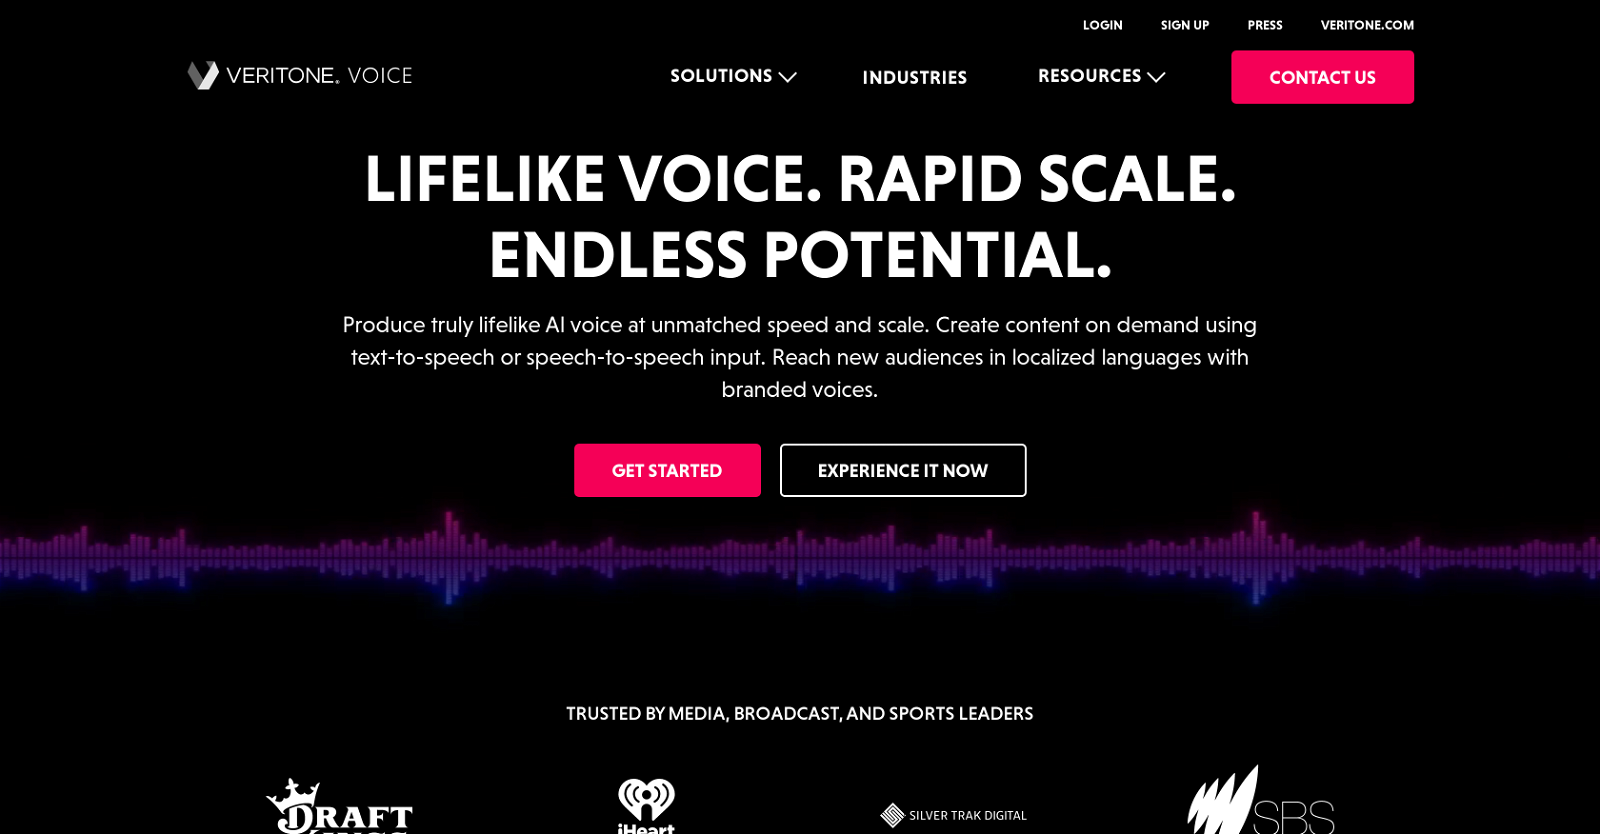 Veritone Voice website